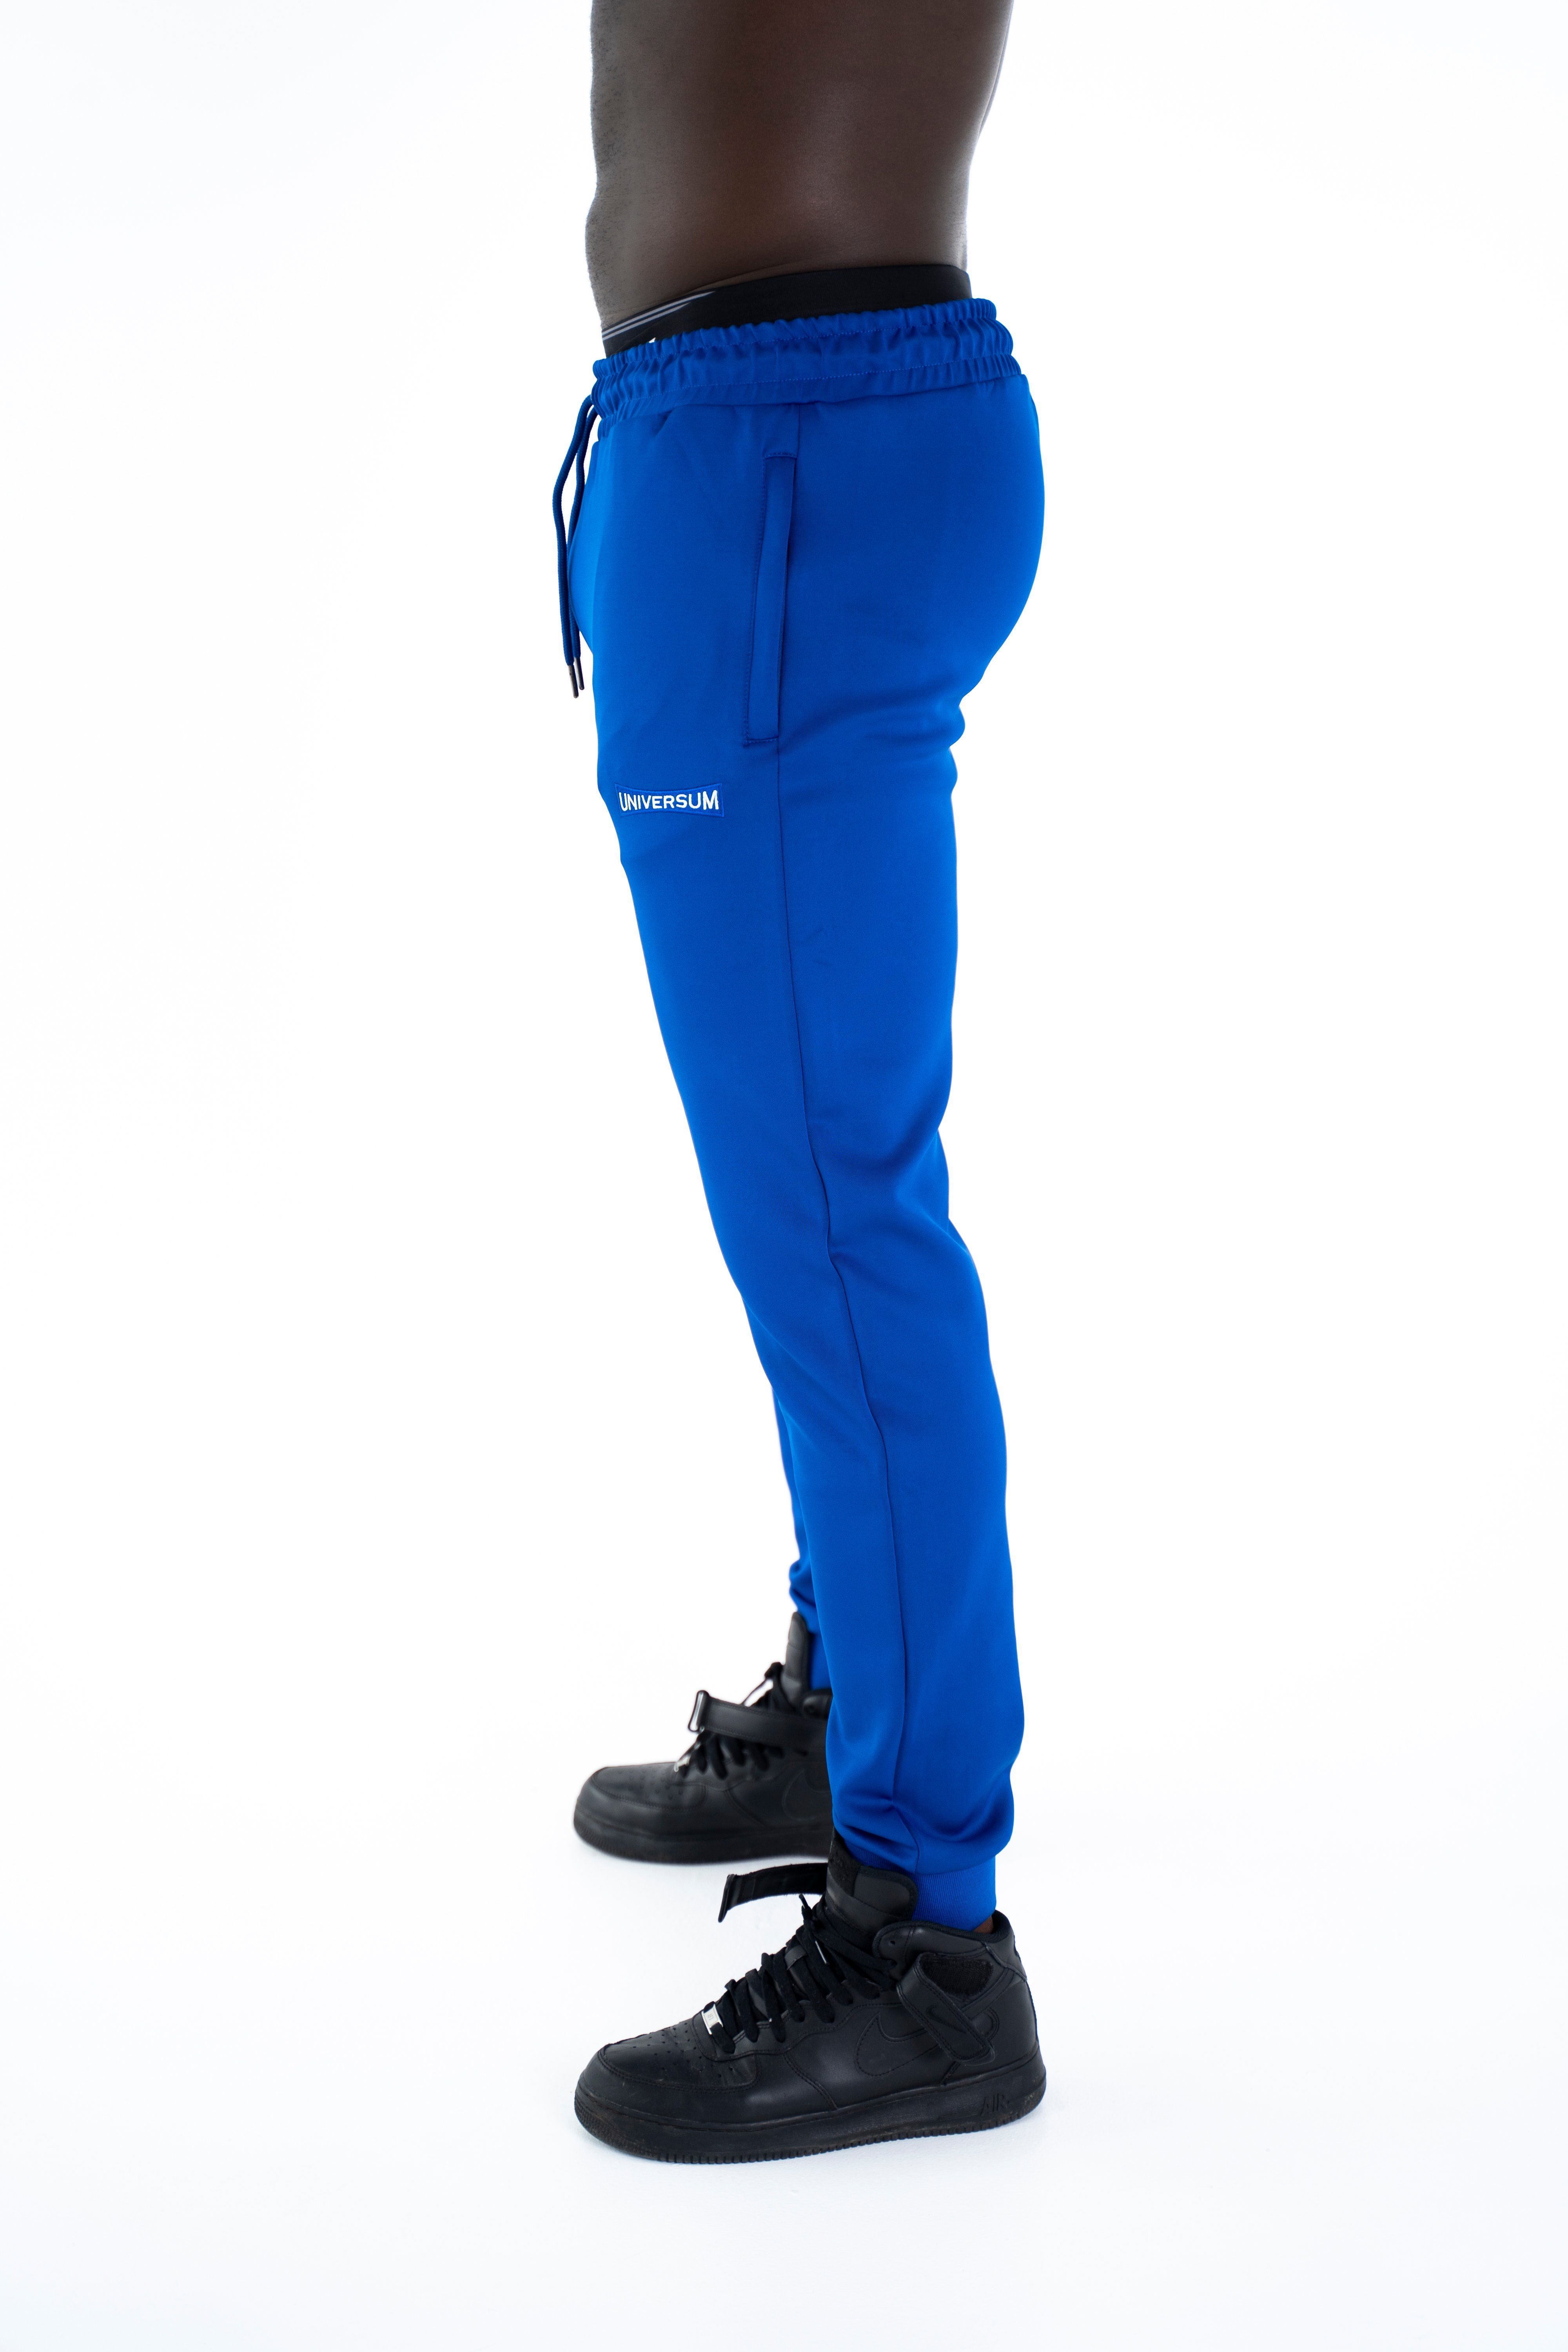 Universum Sportwear Jogginghose Fit Pants blau Jogginghose Freizeit für Fitness Modern und Sport